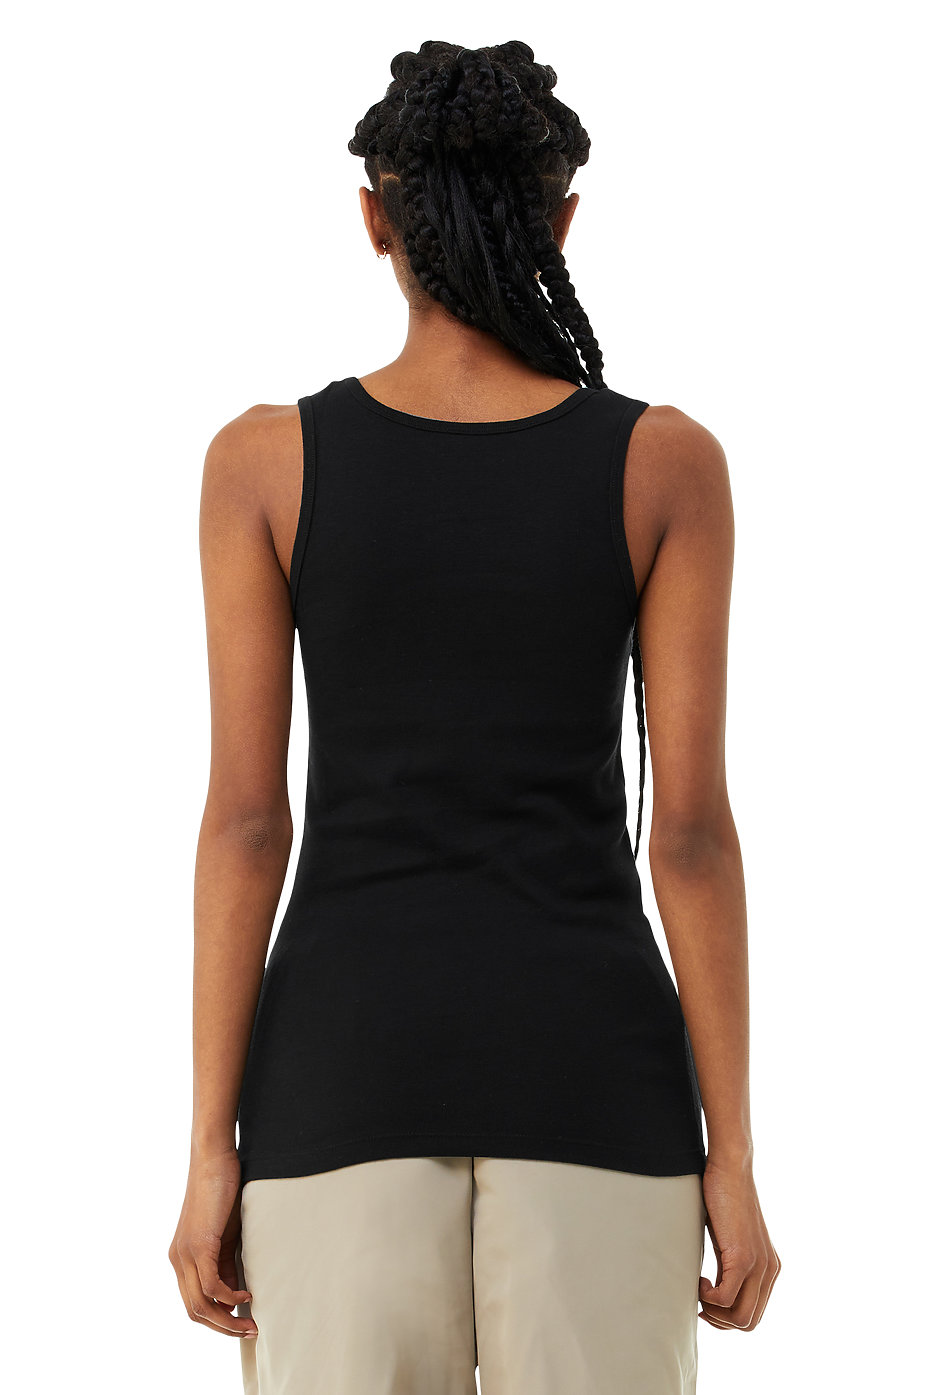 Womens Black Tank Tops & Sleeveless Shirts.